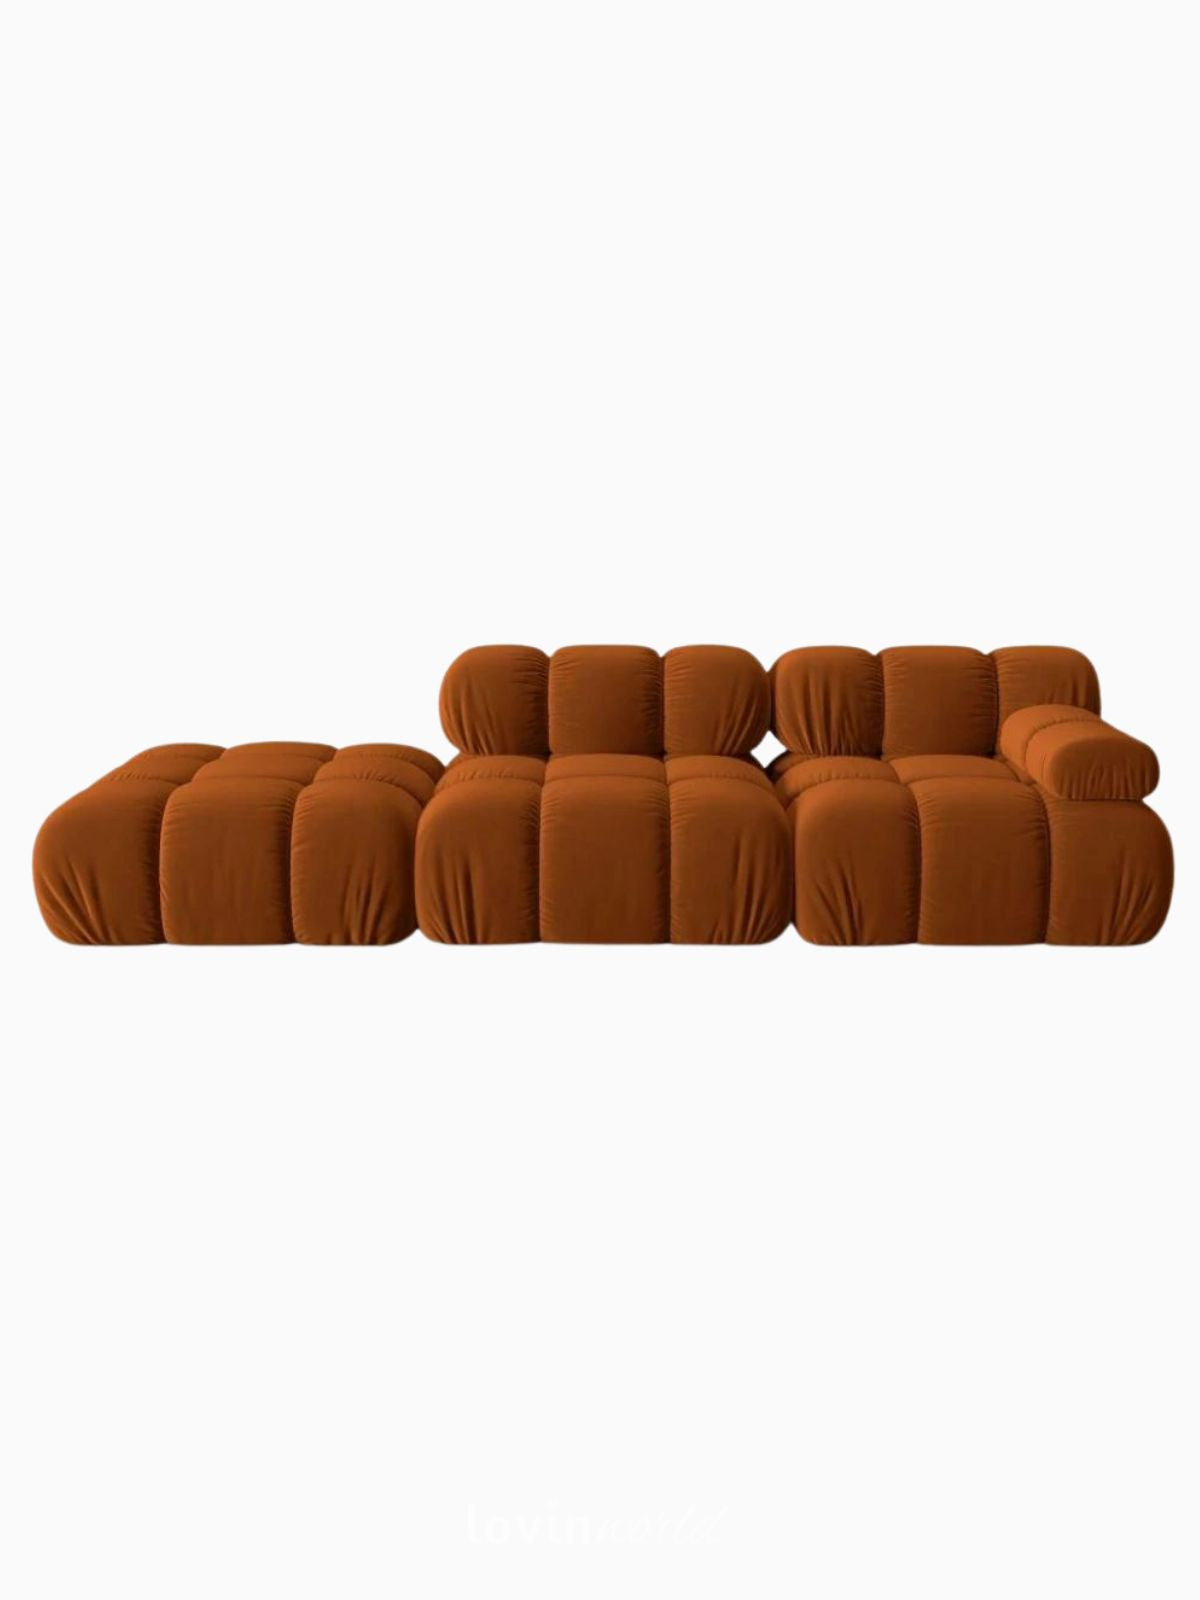 Divano modulare 4 sedute Bellis in velluto, colore arancione-1